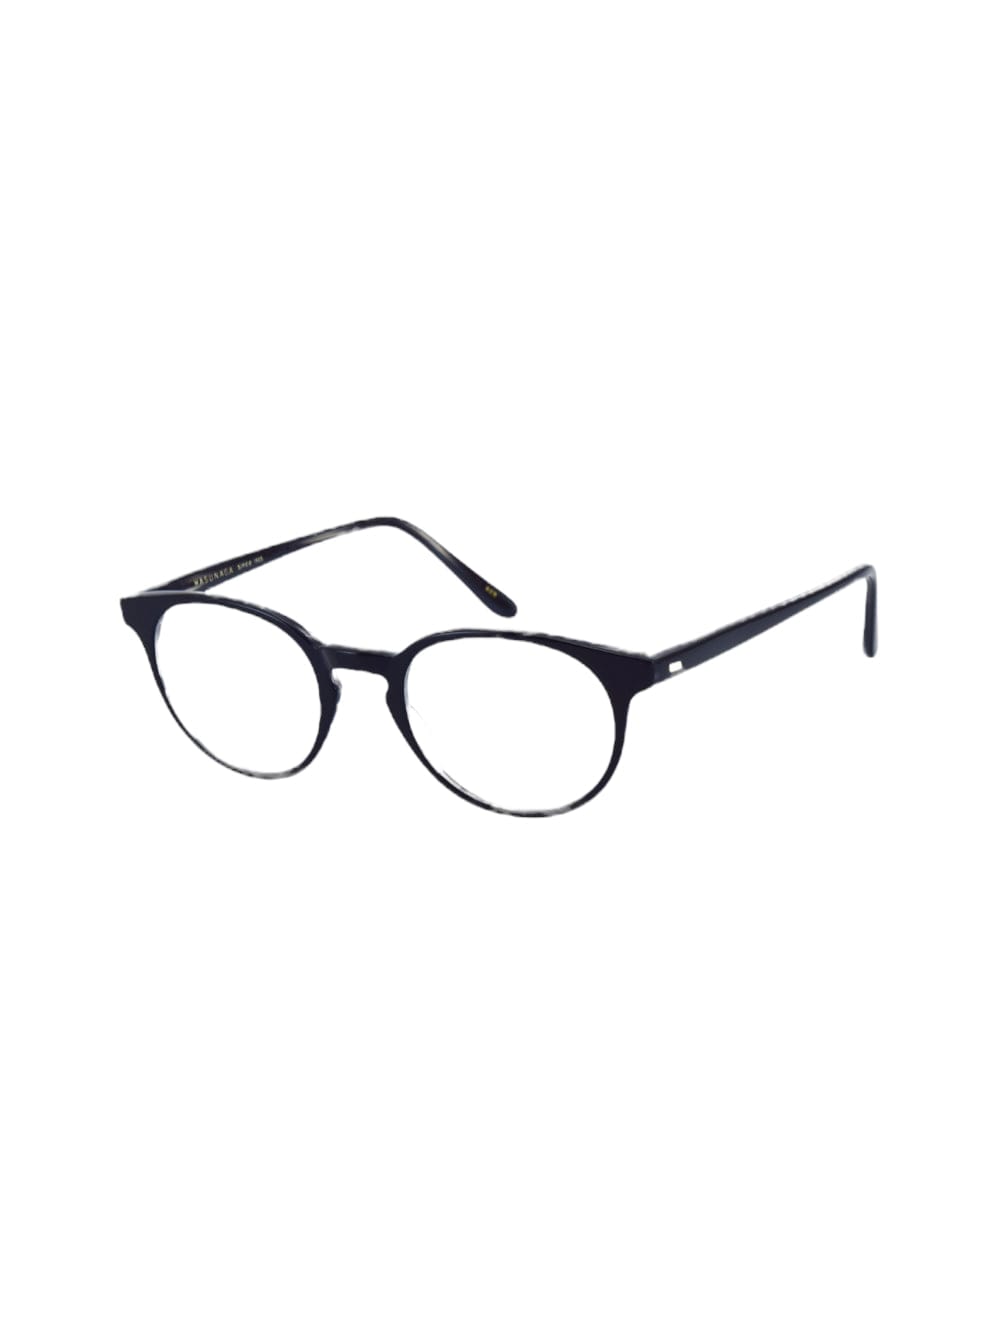 Masunaga Gms-12 - Black Glasses